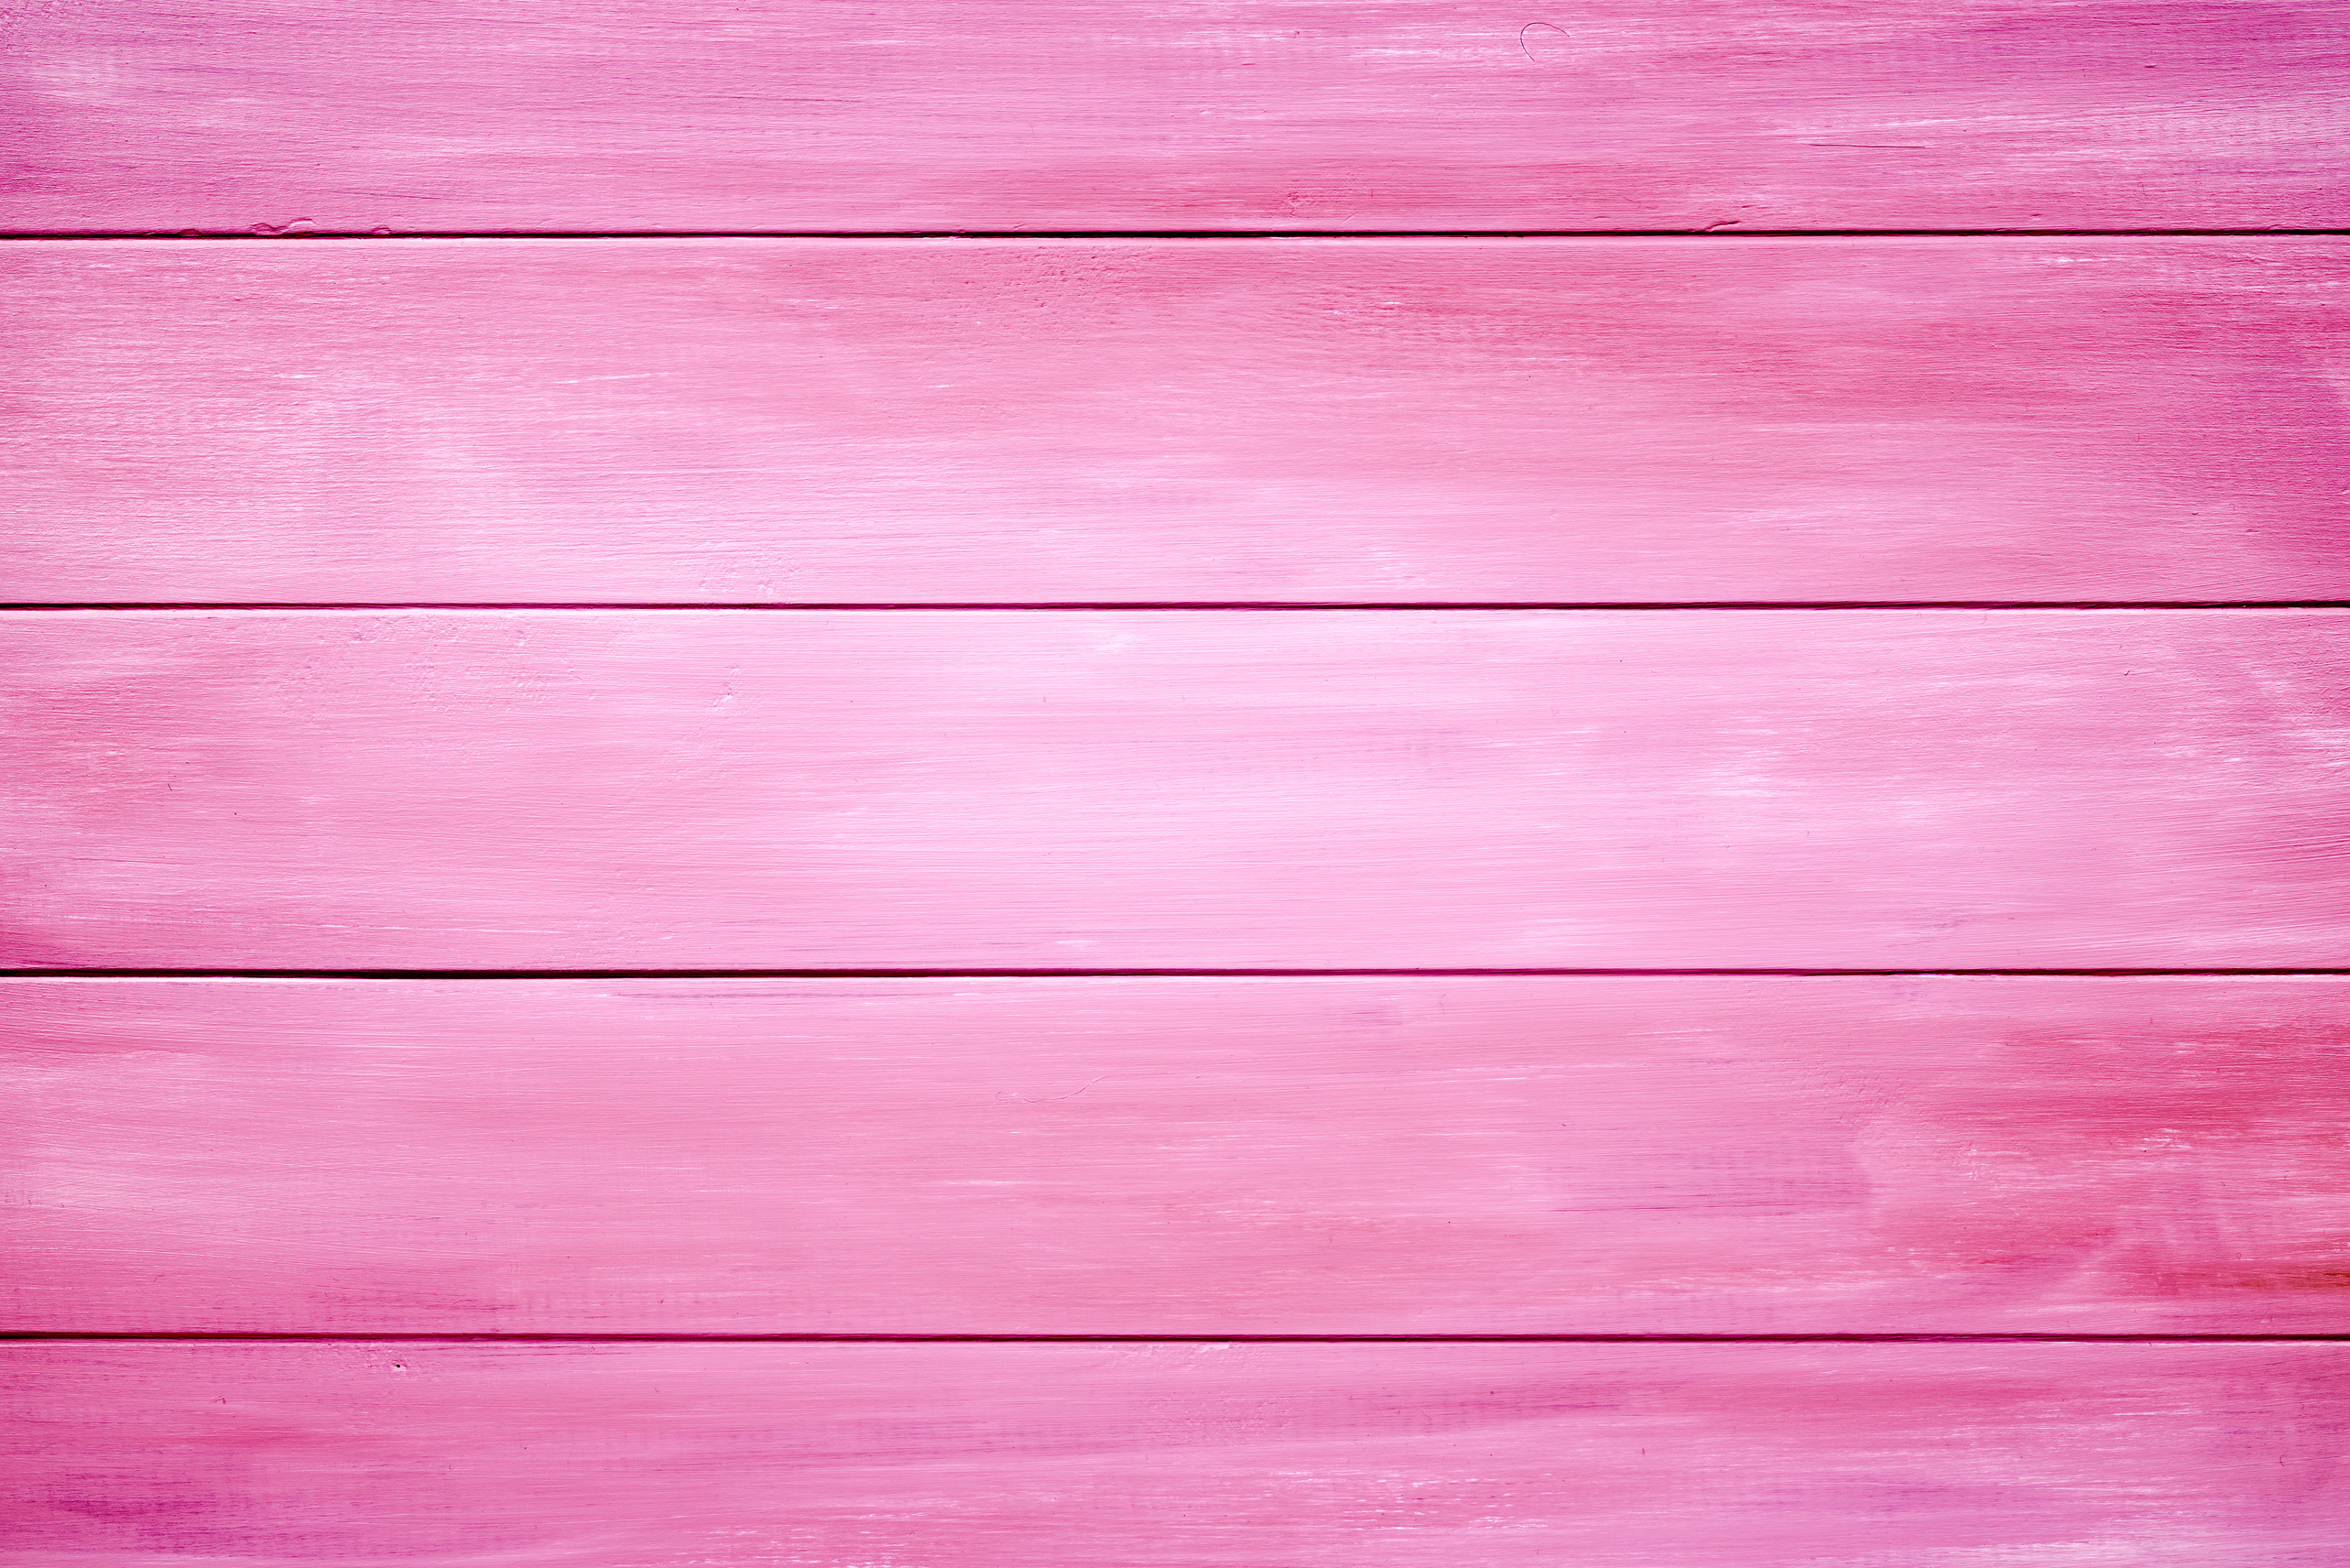 Pink wood planks background